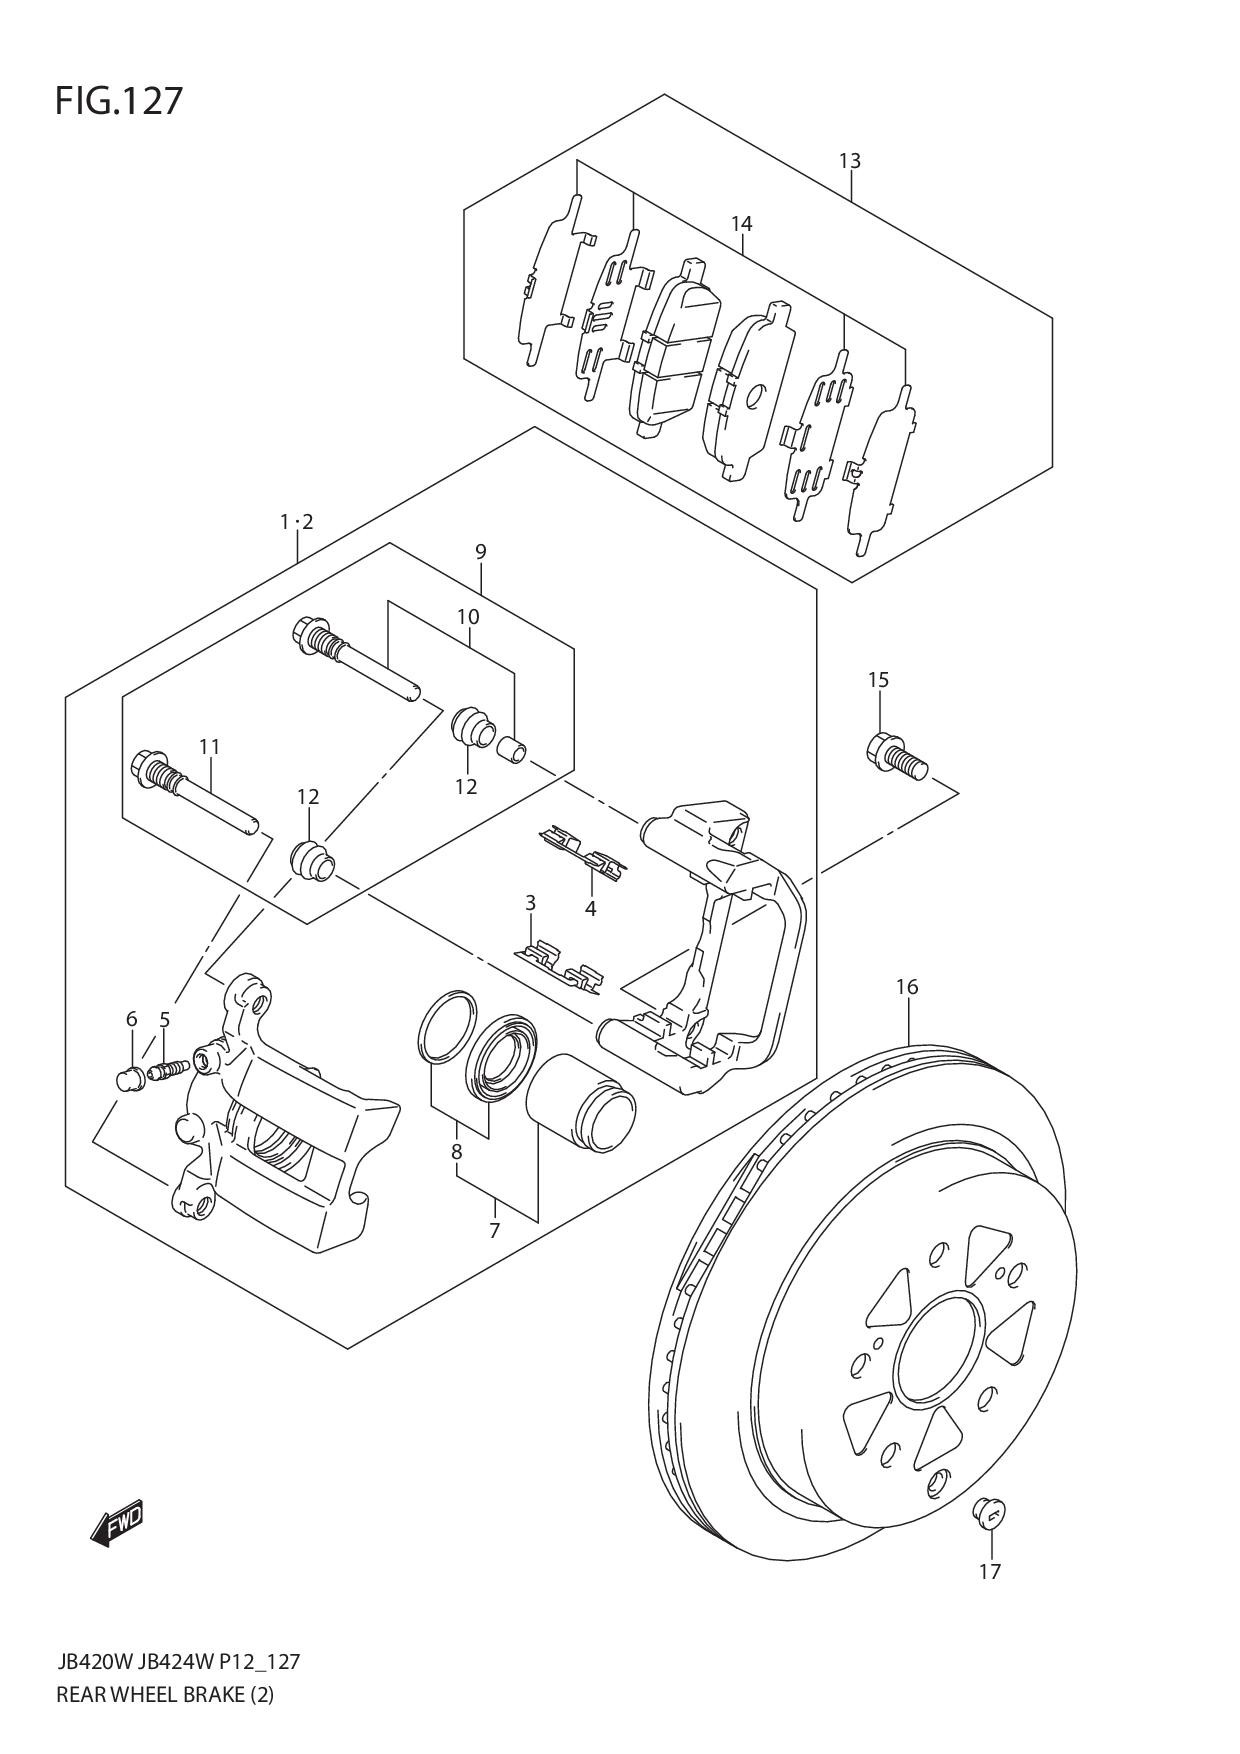 Rear Brake System Diagram Suzuki E Parts Of Rear Brake System Diagram